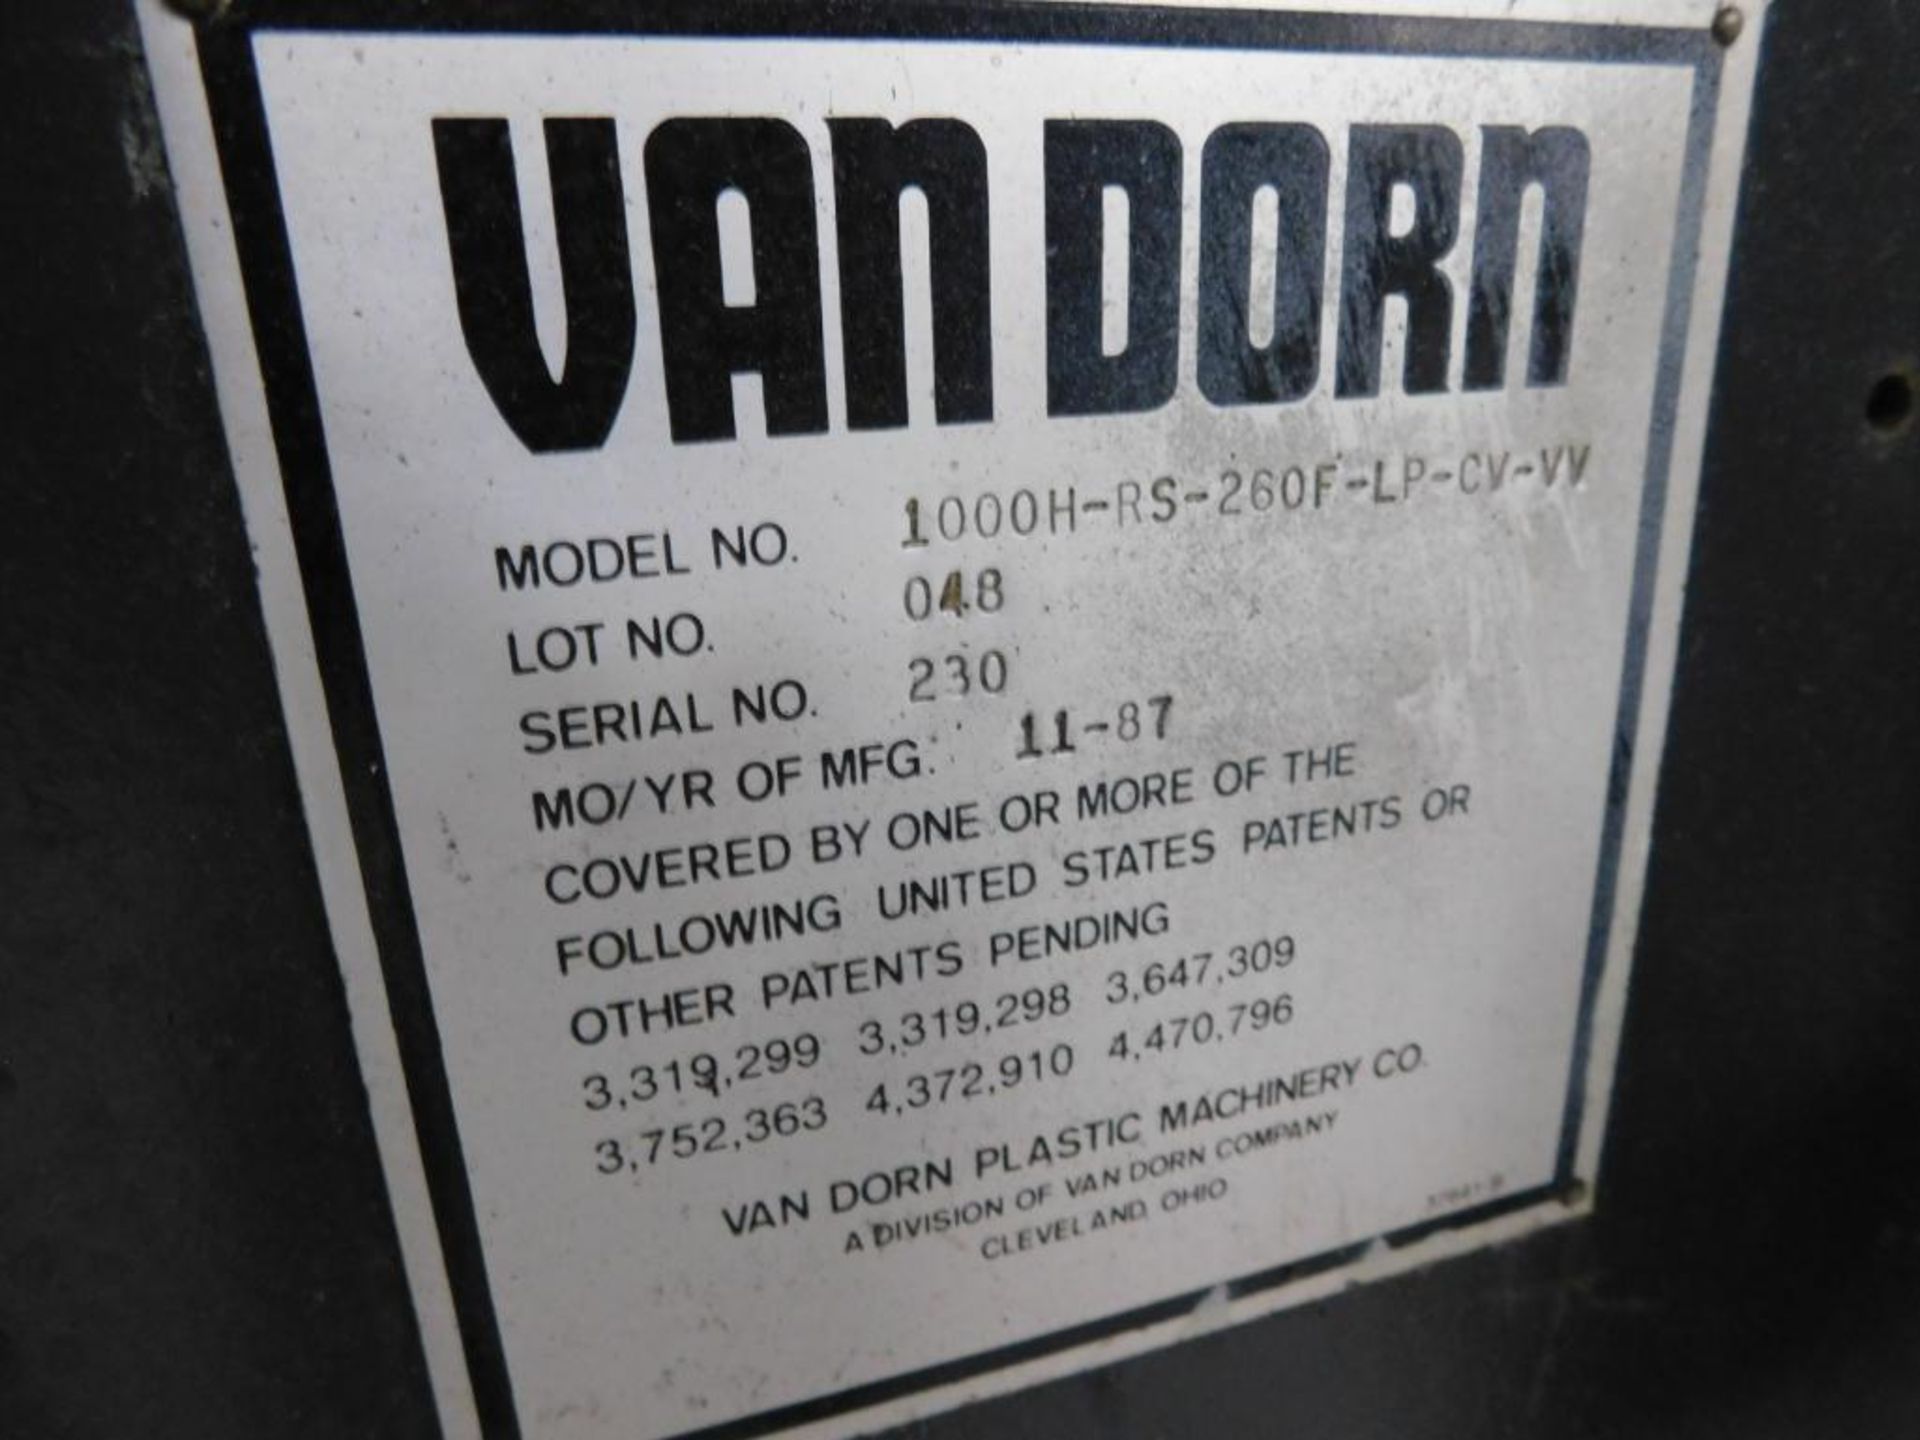 Van Dorn 1000H-RS260F-LP-CV-VV Plastic Injection Molding Machine, 1000-Ton 260 oz Shot Size, S/N 230 - Image 14 of 14